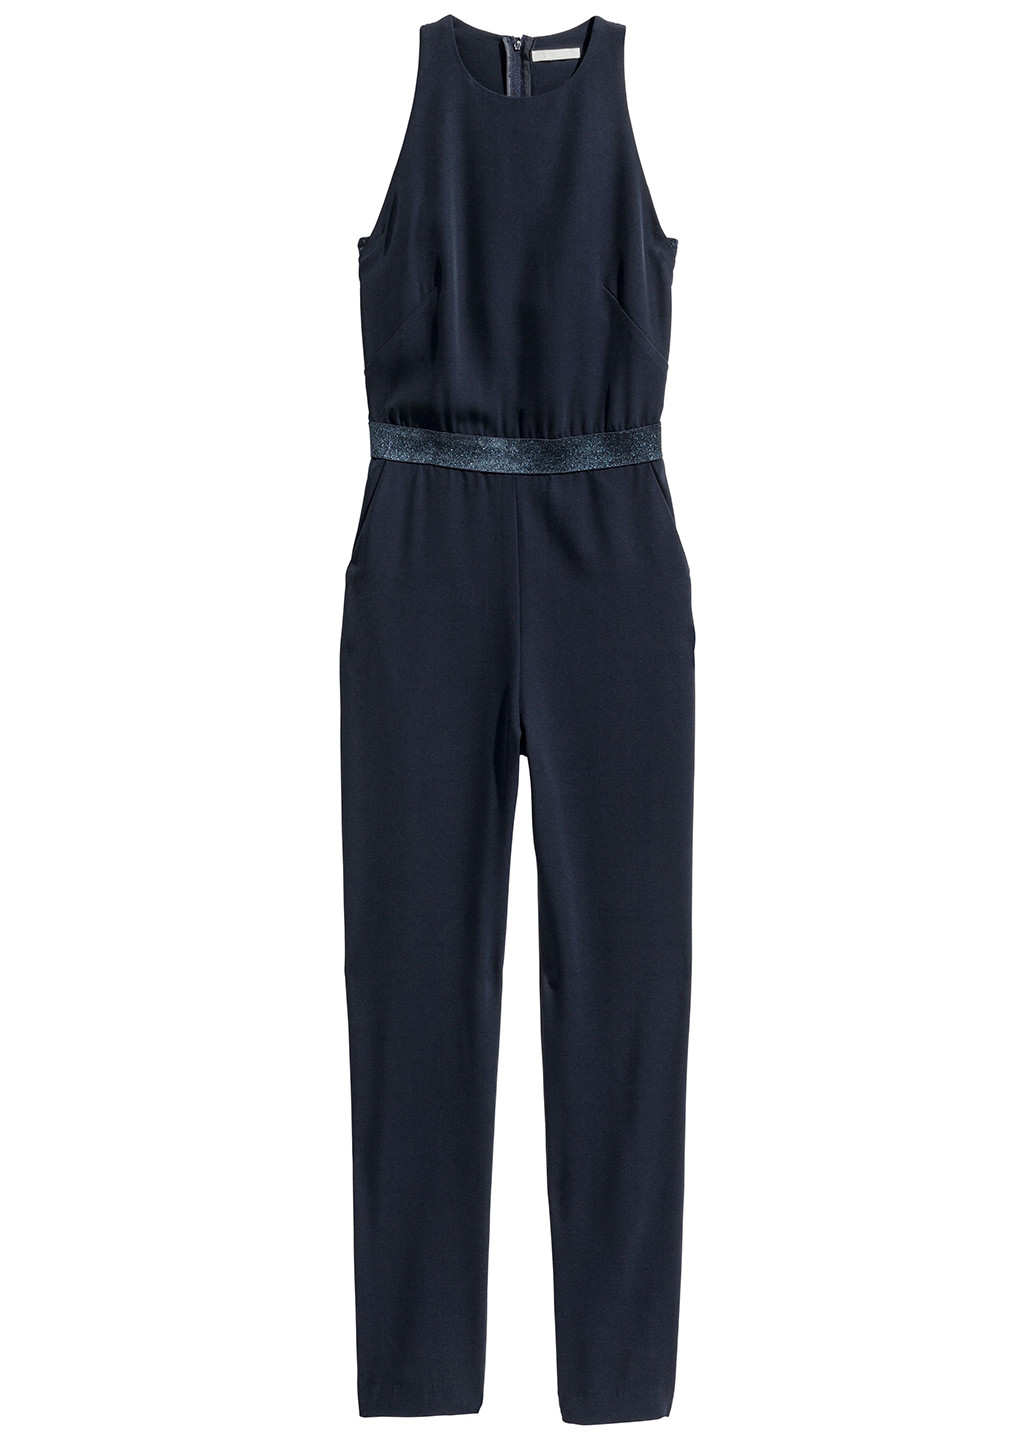 Комбинезон H&M комбинезон-брюки однотонный синий кэжуал